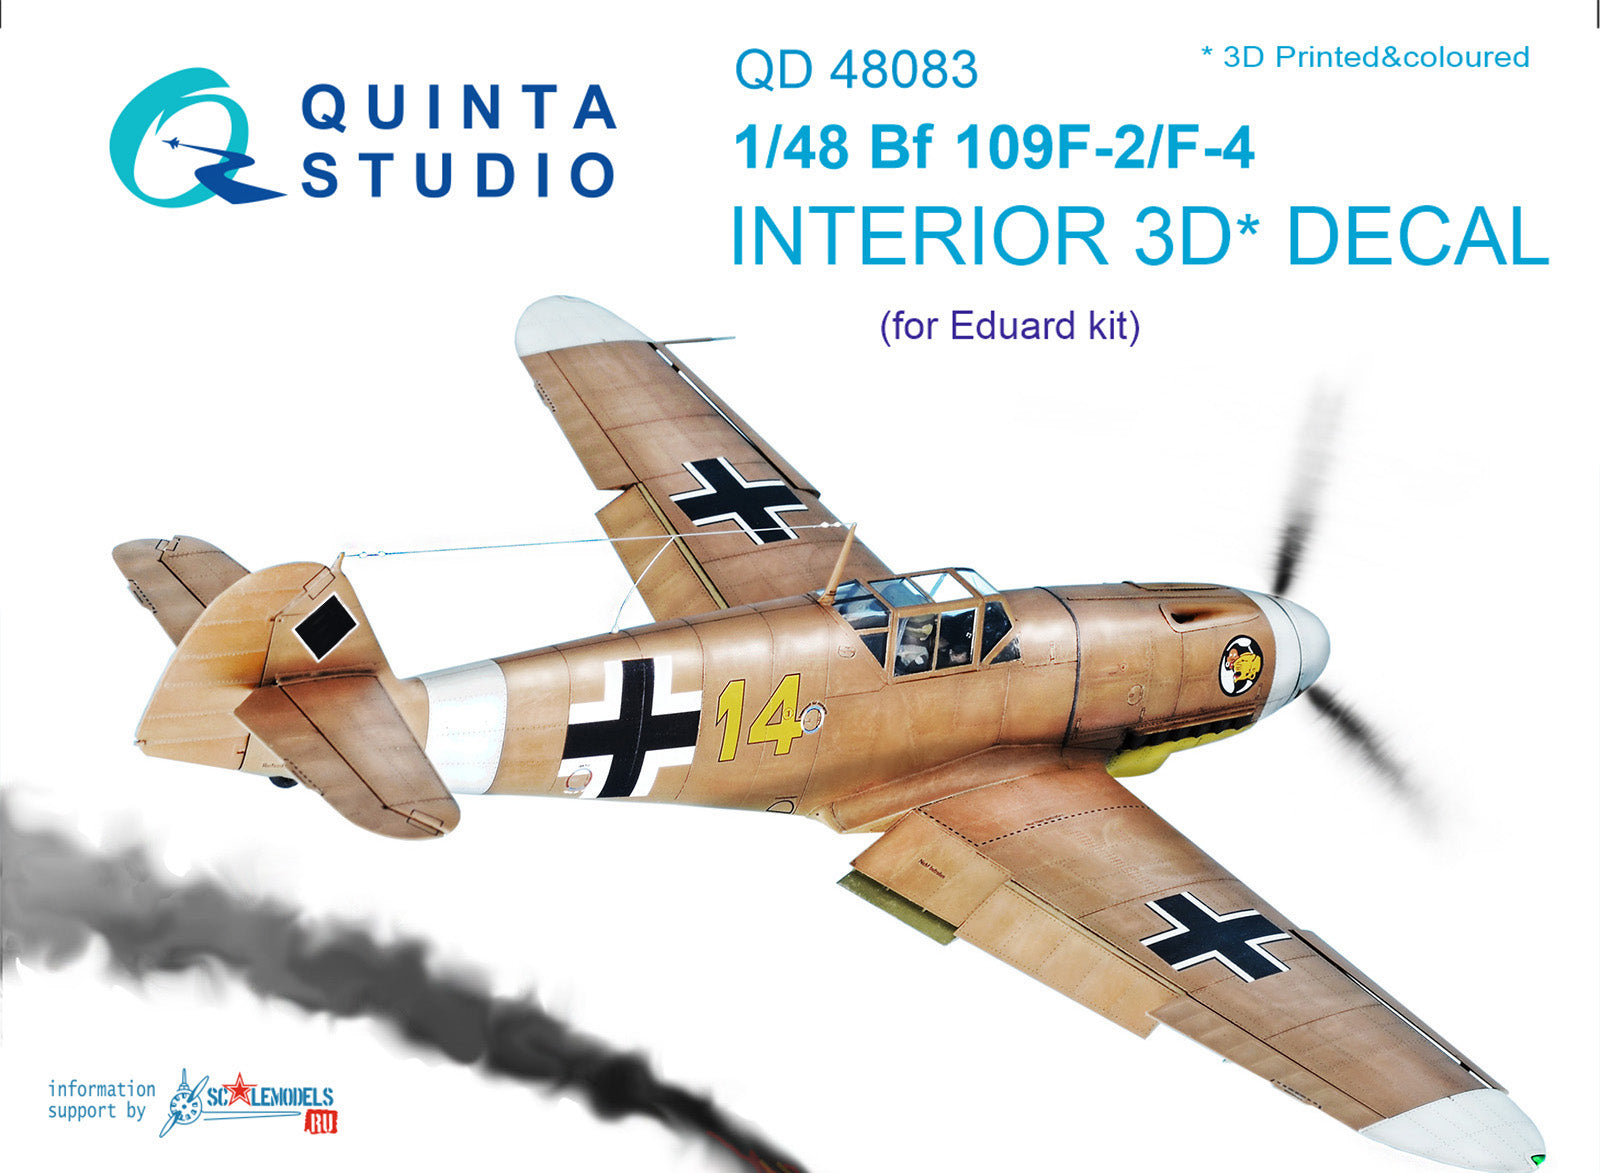 Quinta Studio - 1/48 Bf 109F-2/F-4 - QD48083 for Eduard kit